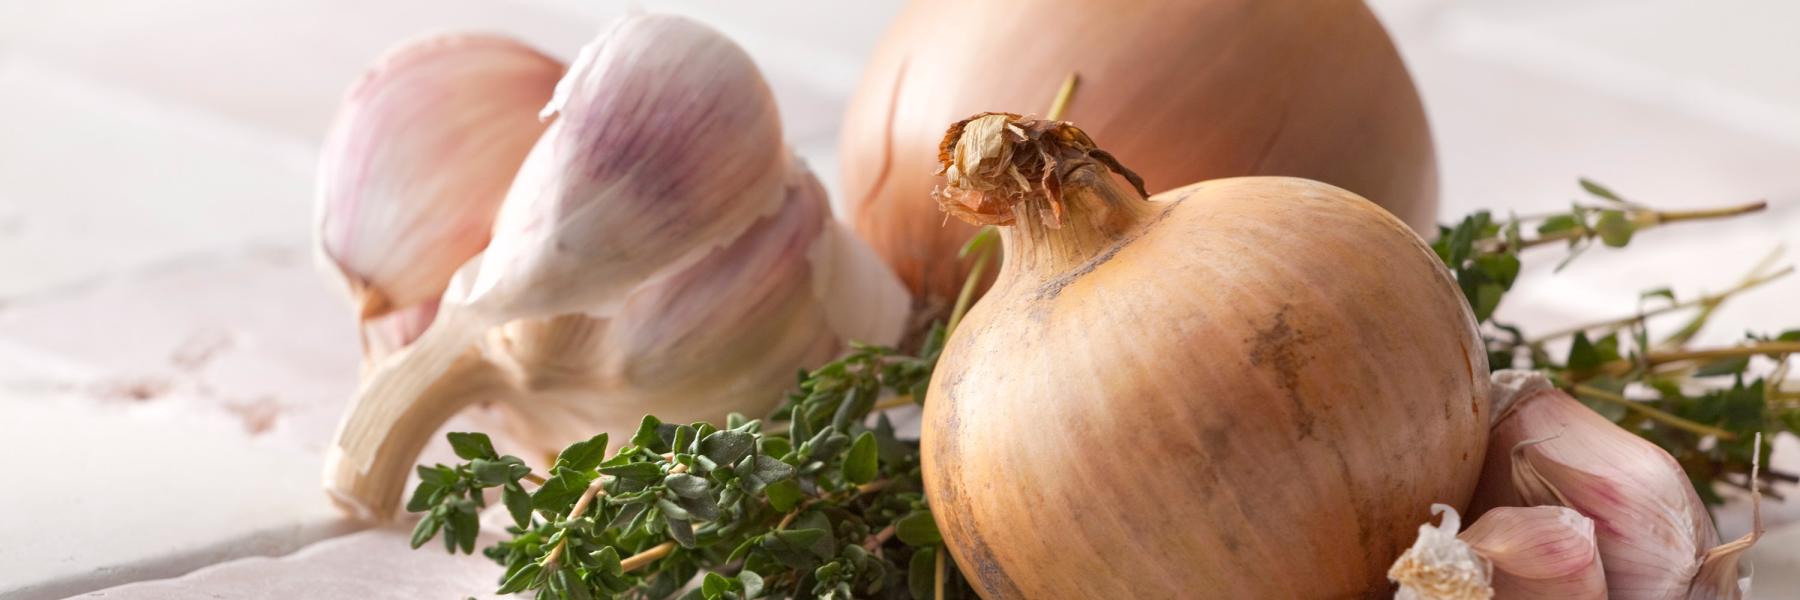 Avoid garlic and onions